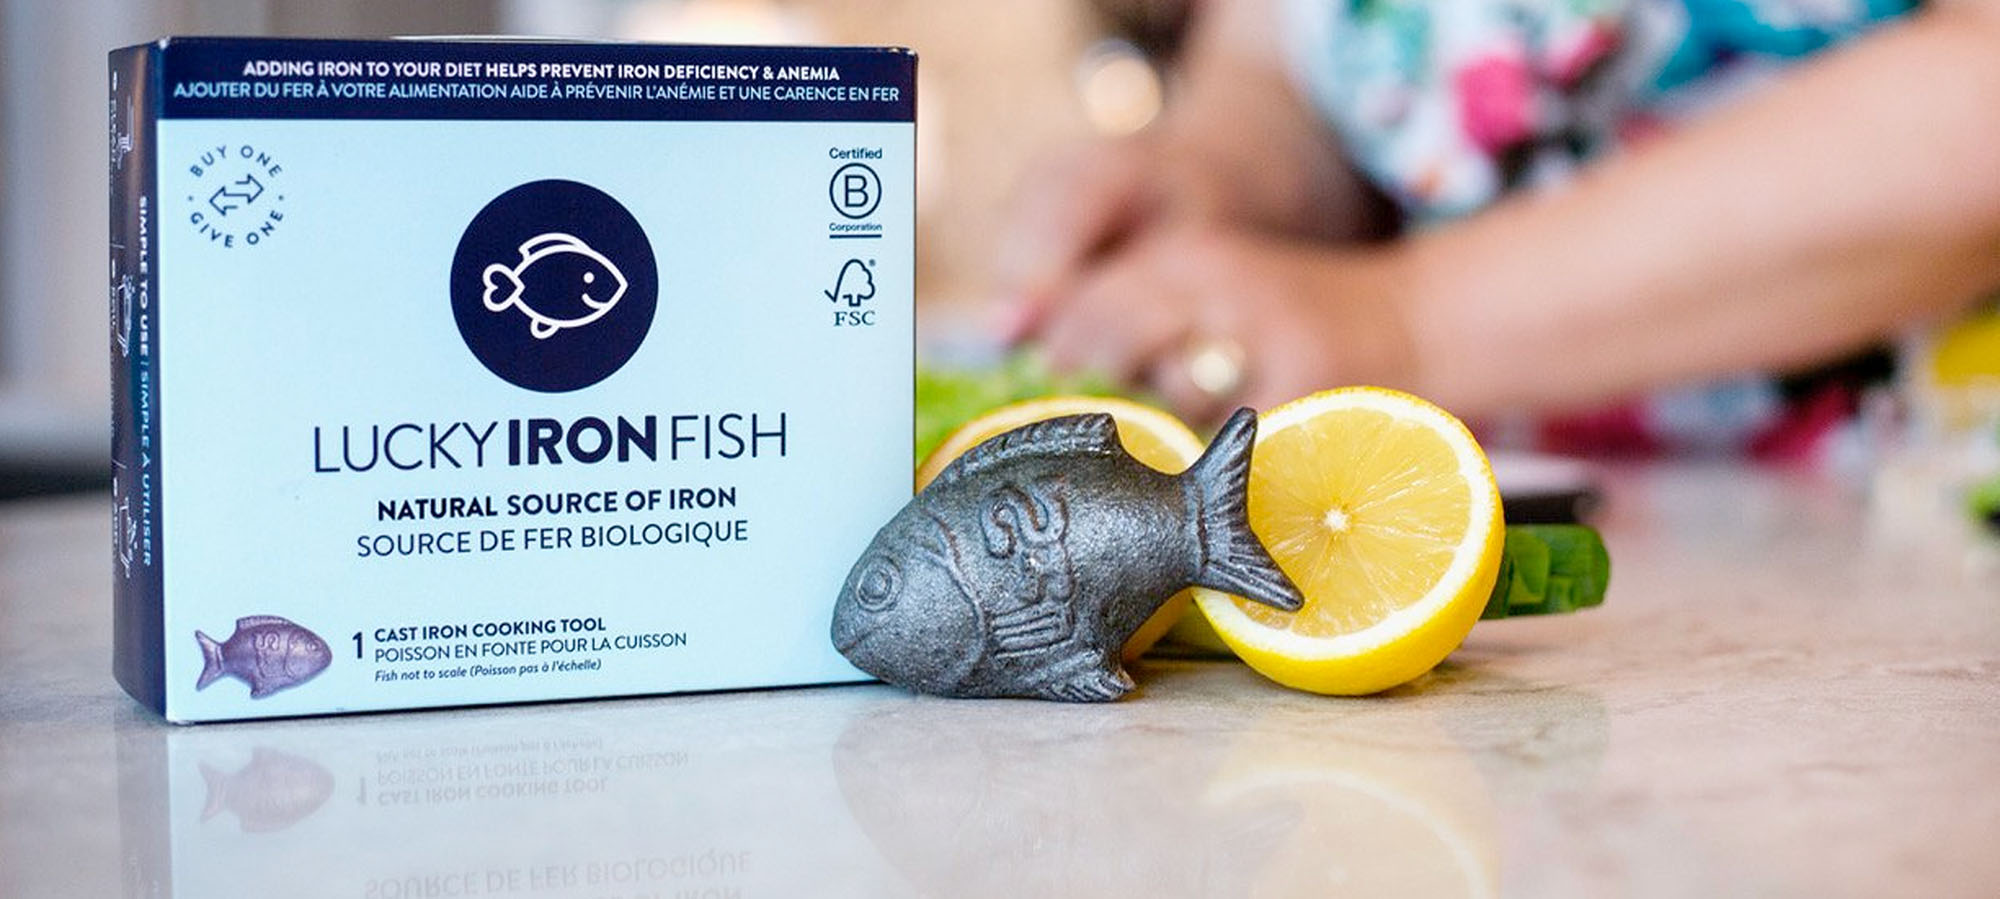 https://zestybrands.ca/wp-content/uploads/2022/10/Lucky-iron-fish-package-design-vancouver-zesty-brands.jpg